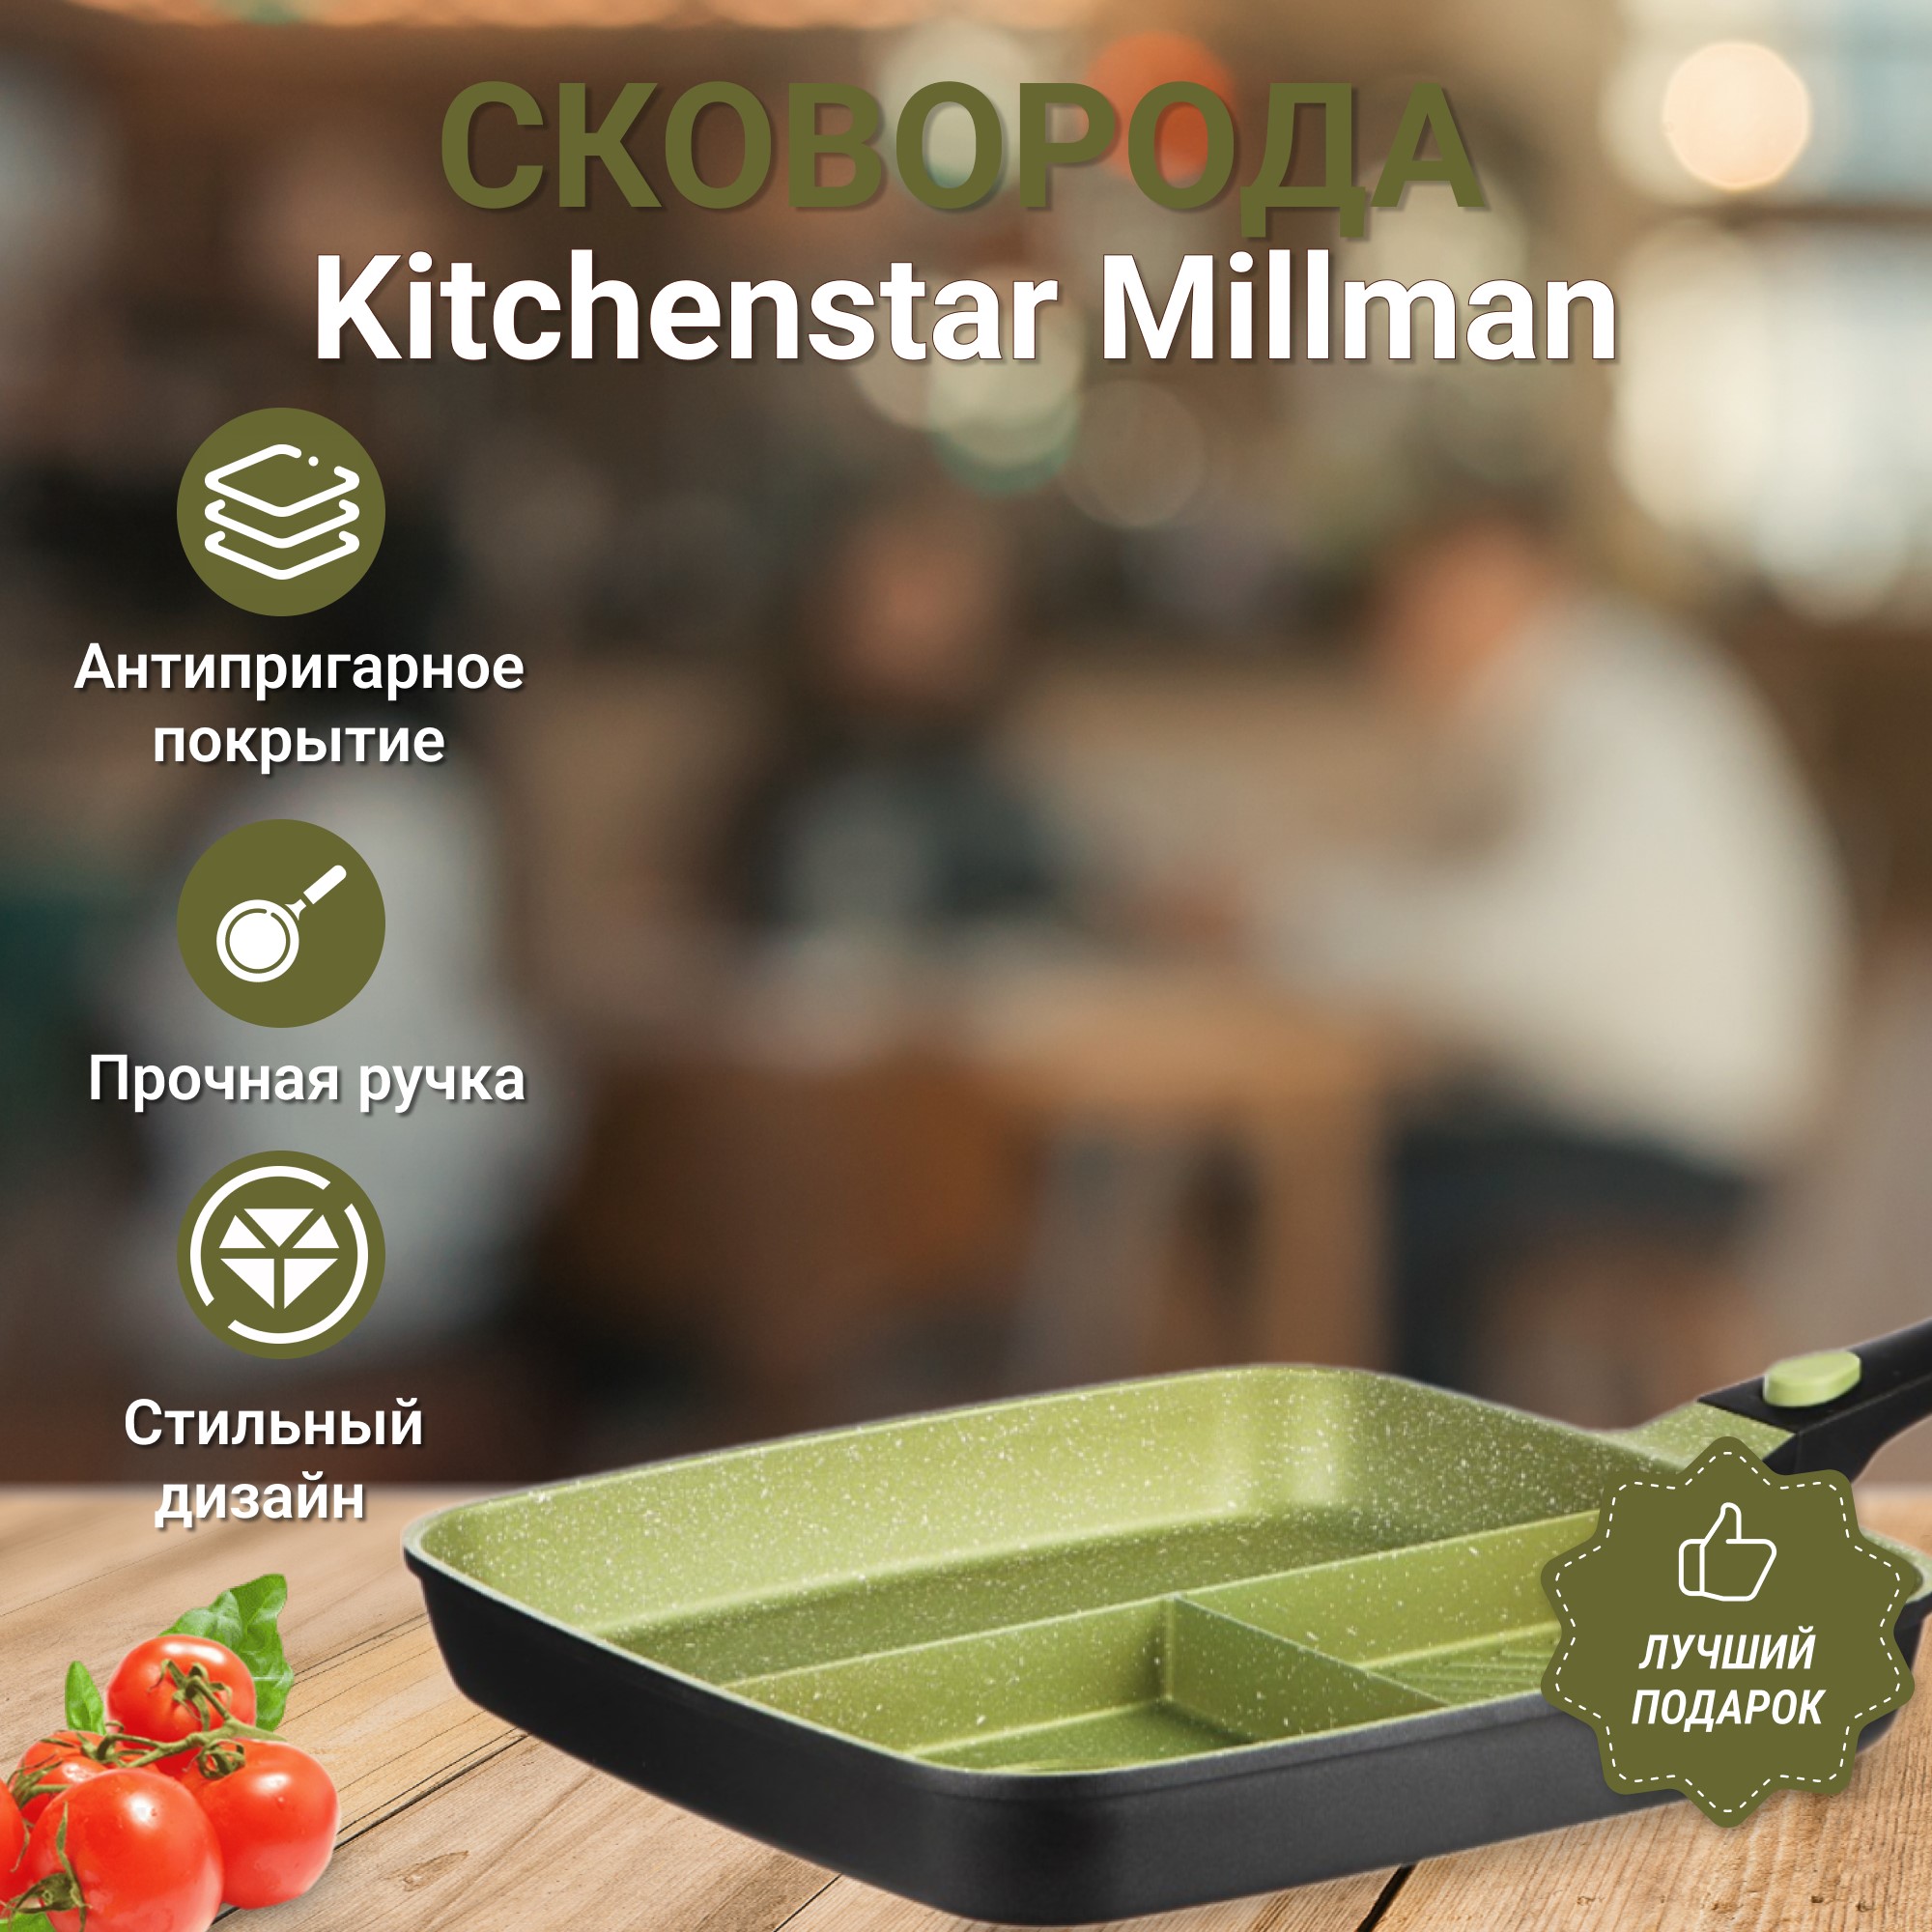 Сковорода Kitchen star Millman с отсеками 32x32x4,5, цвет зеленый - фото 5